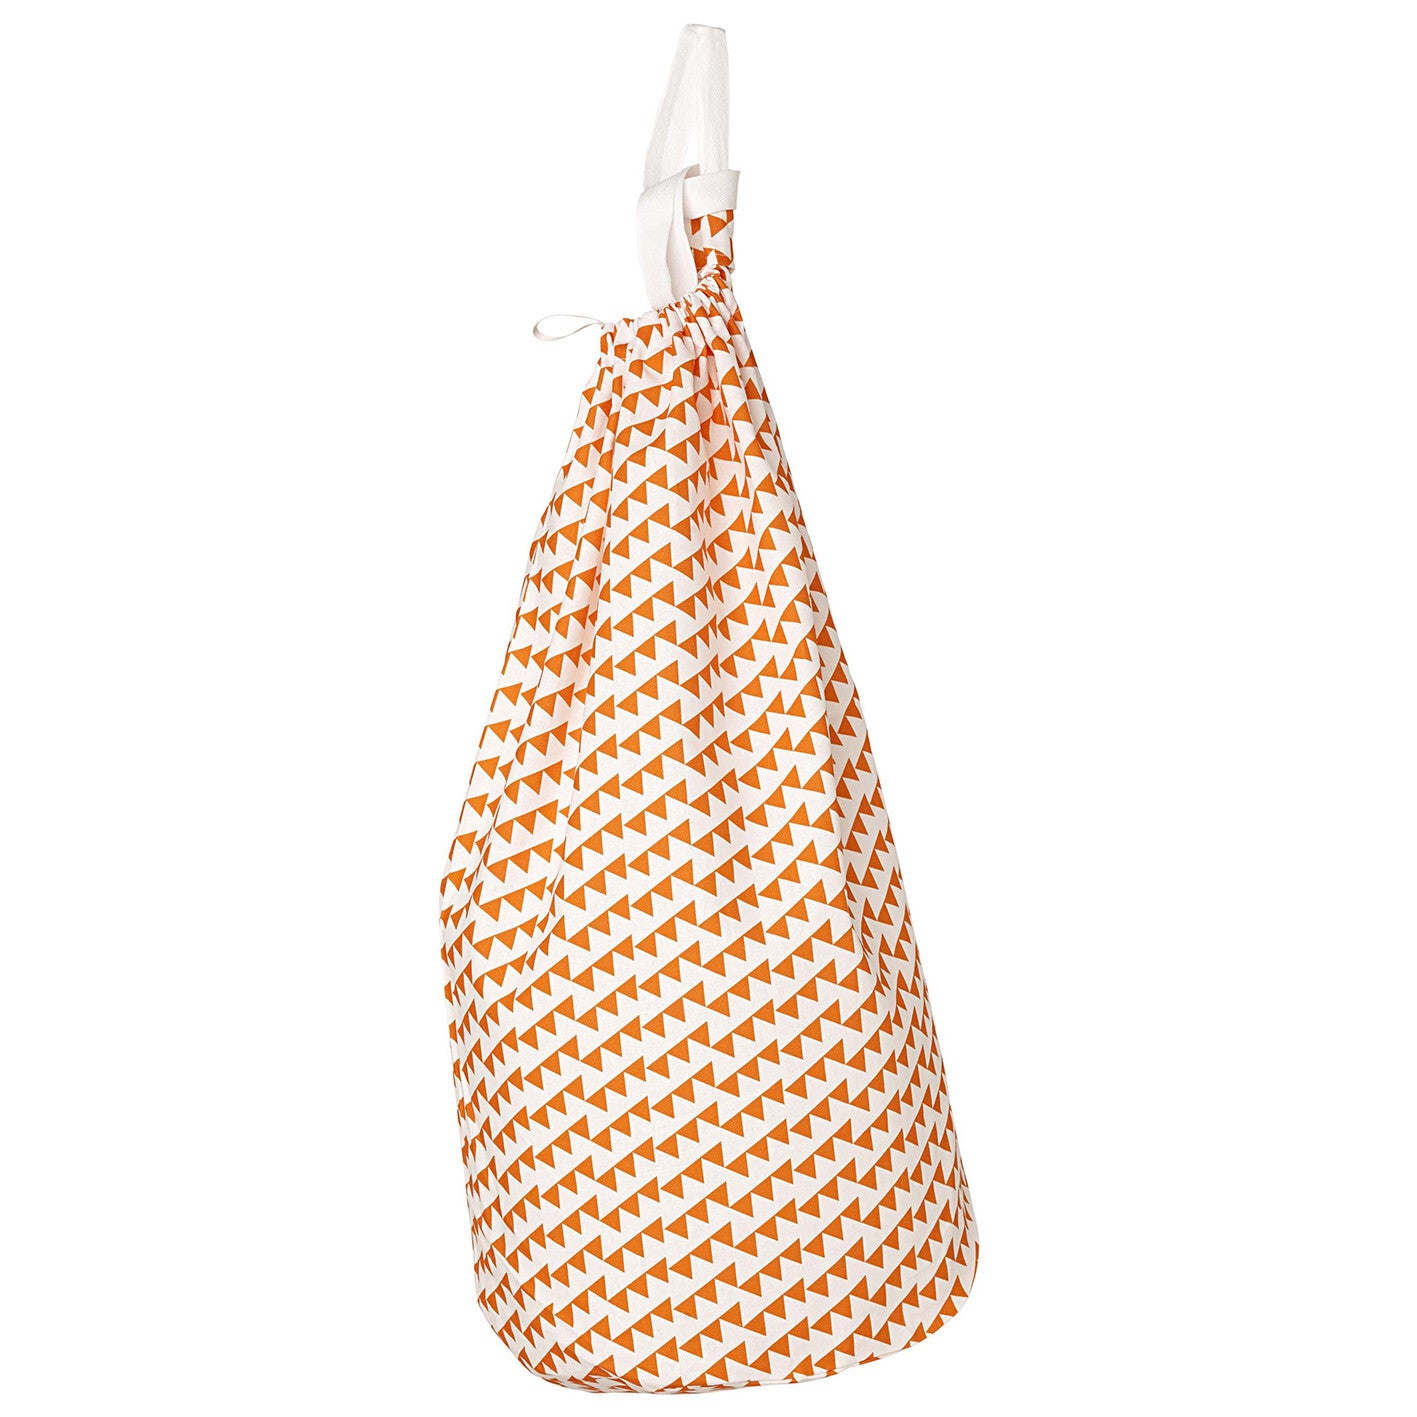 Bunting Geometric Pattern Cotton Linen Drawstring Laundry & Storage Bag in Bright Pumpkin Orange ships from Canada (USA)